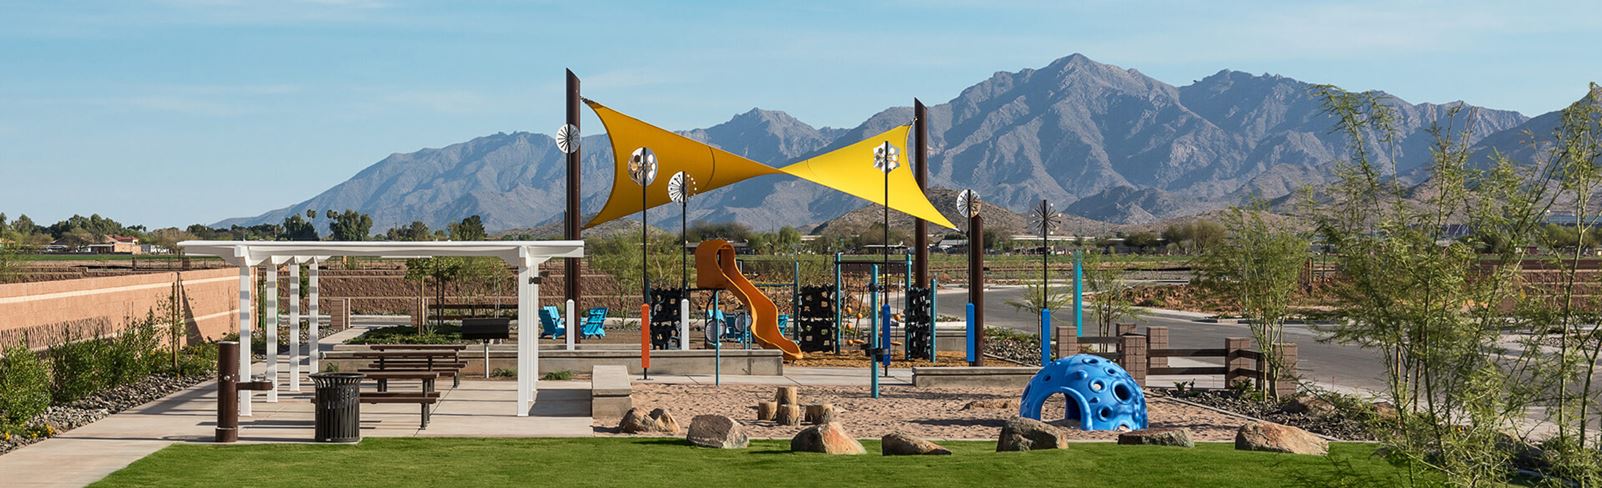 Overall view of Stargaze Grove Park at Alamar community in Avondale, AZ